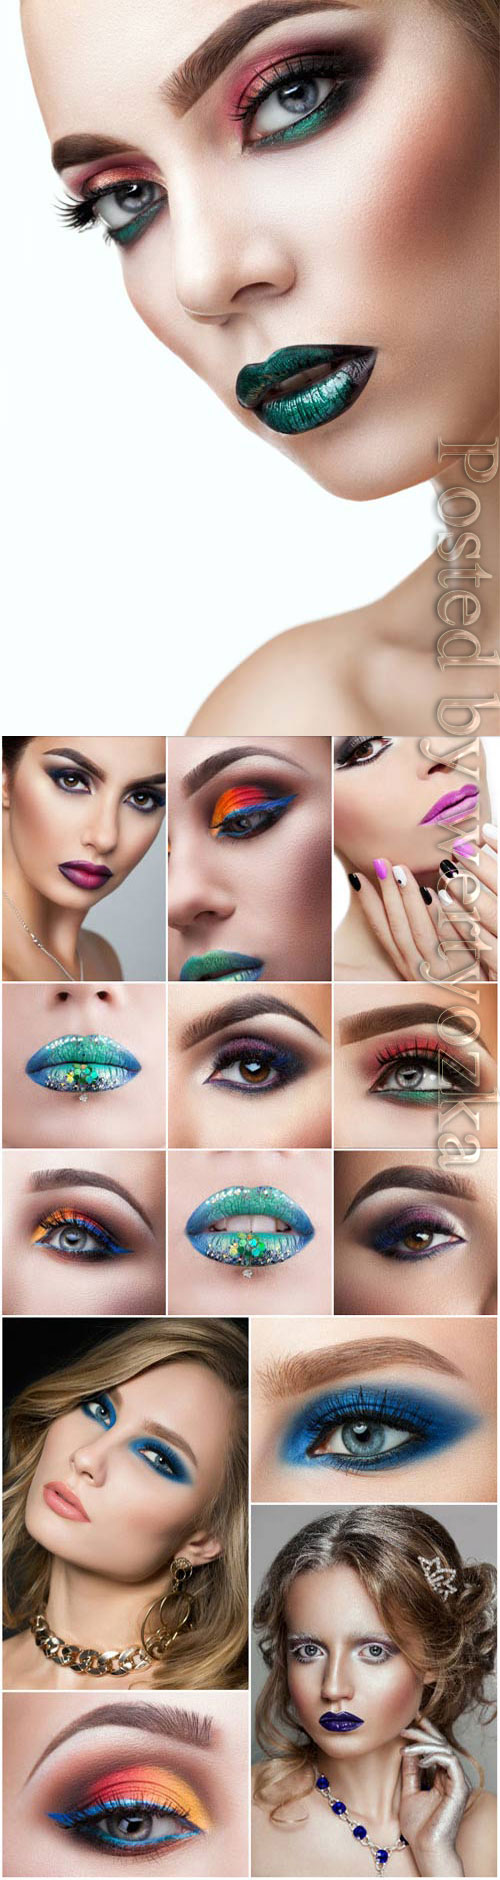 Girls with beautiful fashion makeup stock photo